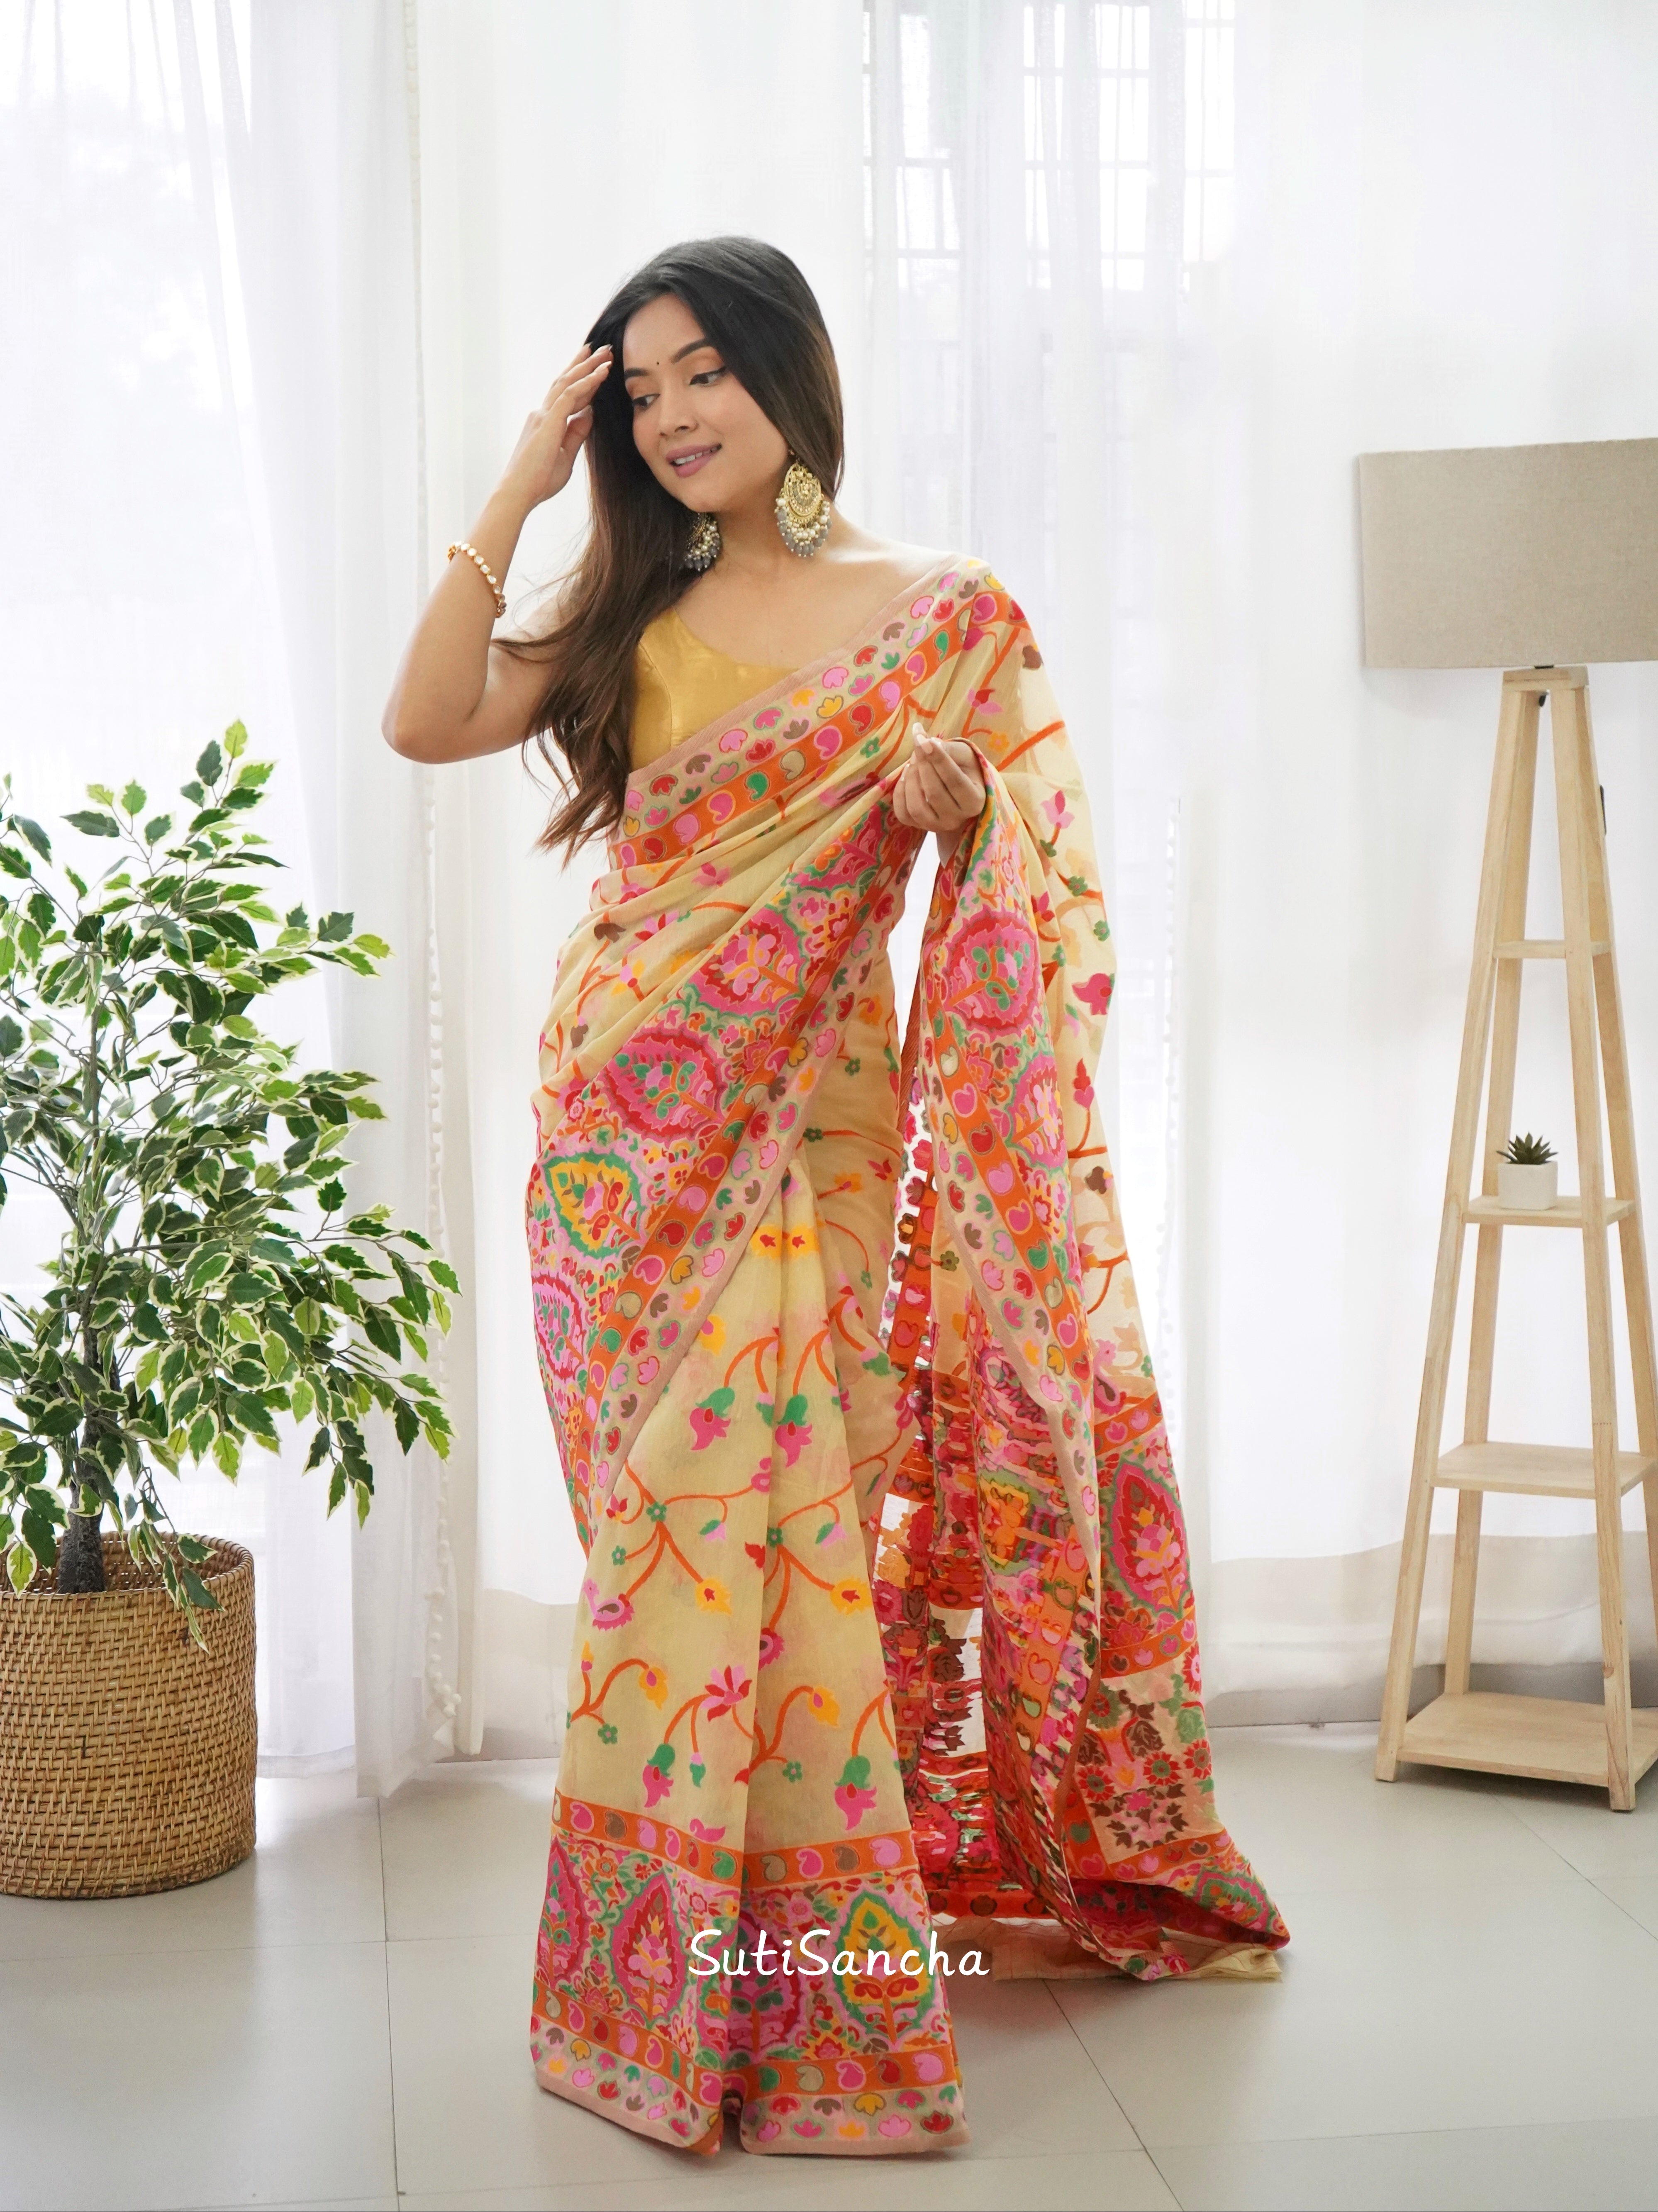 sutisancha Multi-Color Kashmiri Weaving Soft Modal Silk Saree